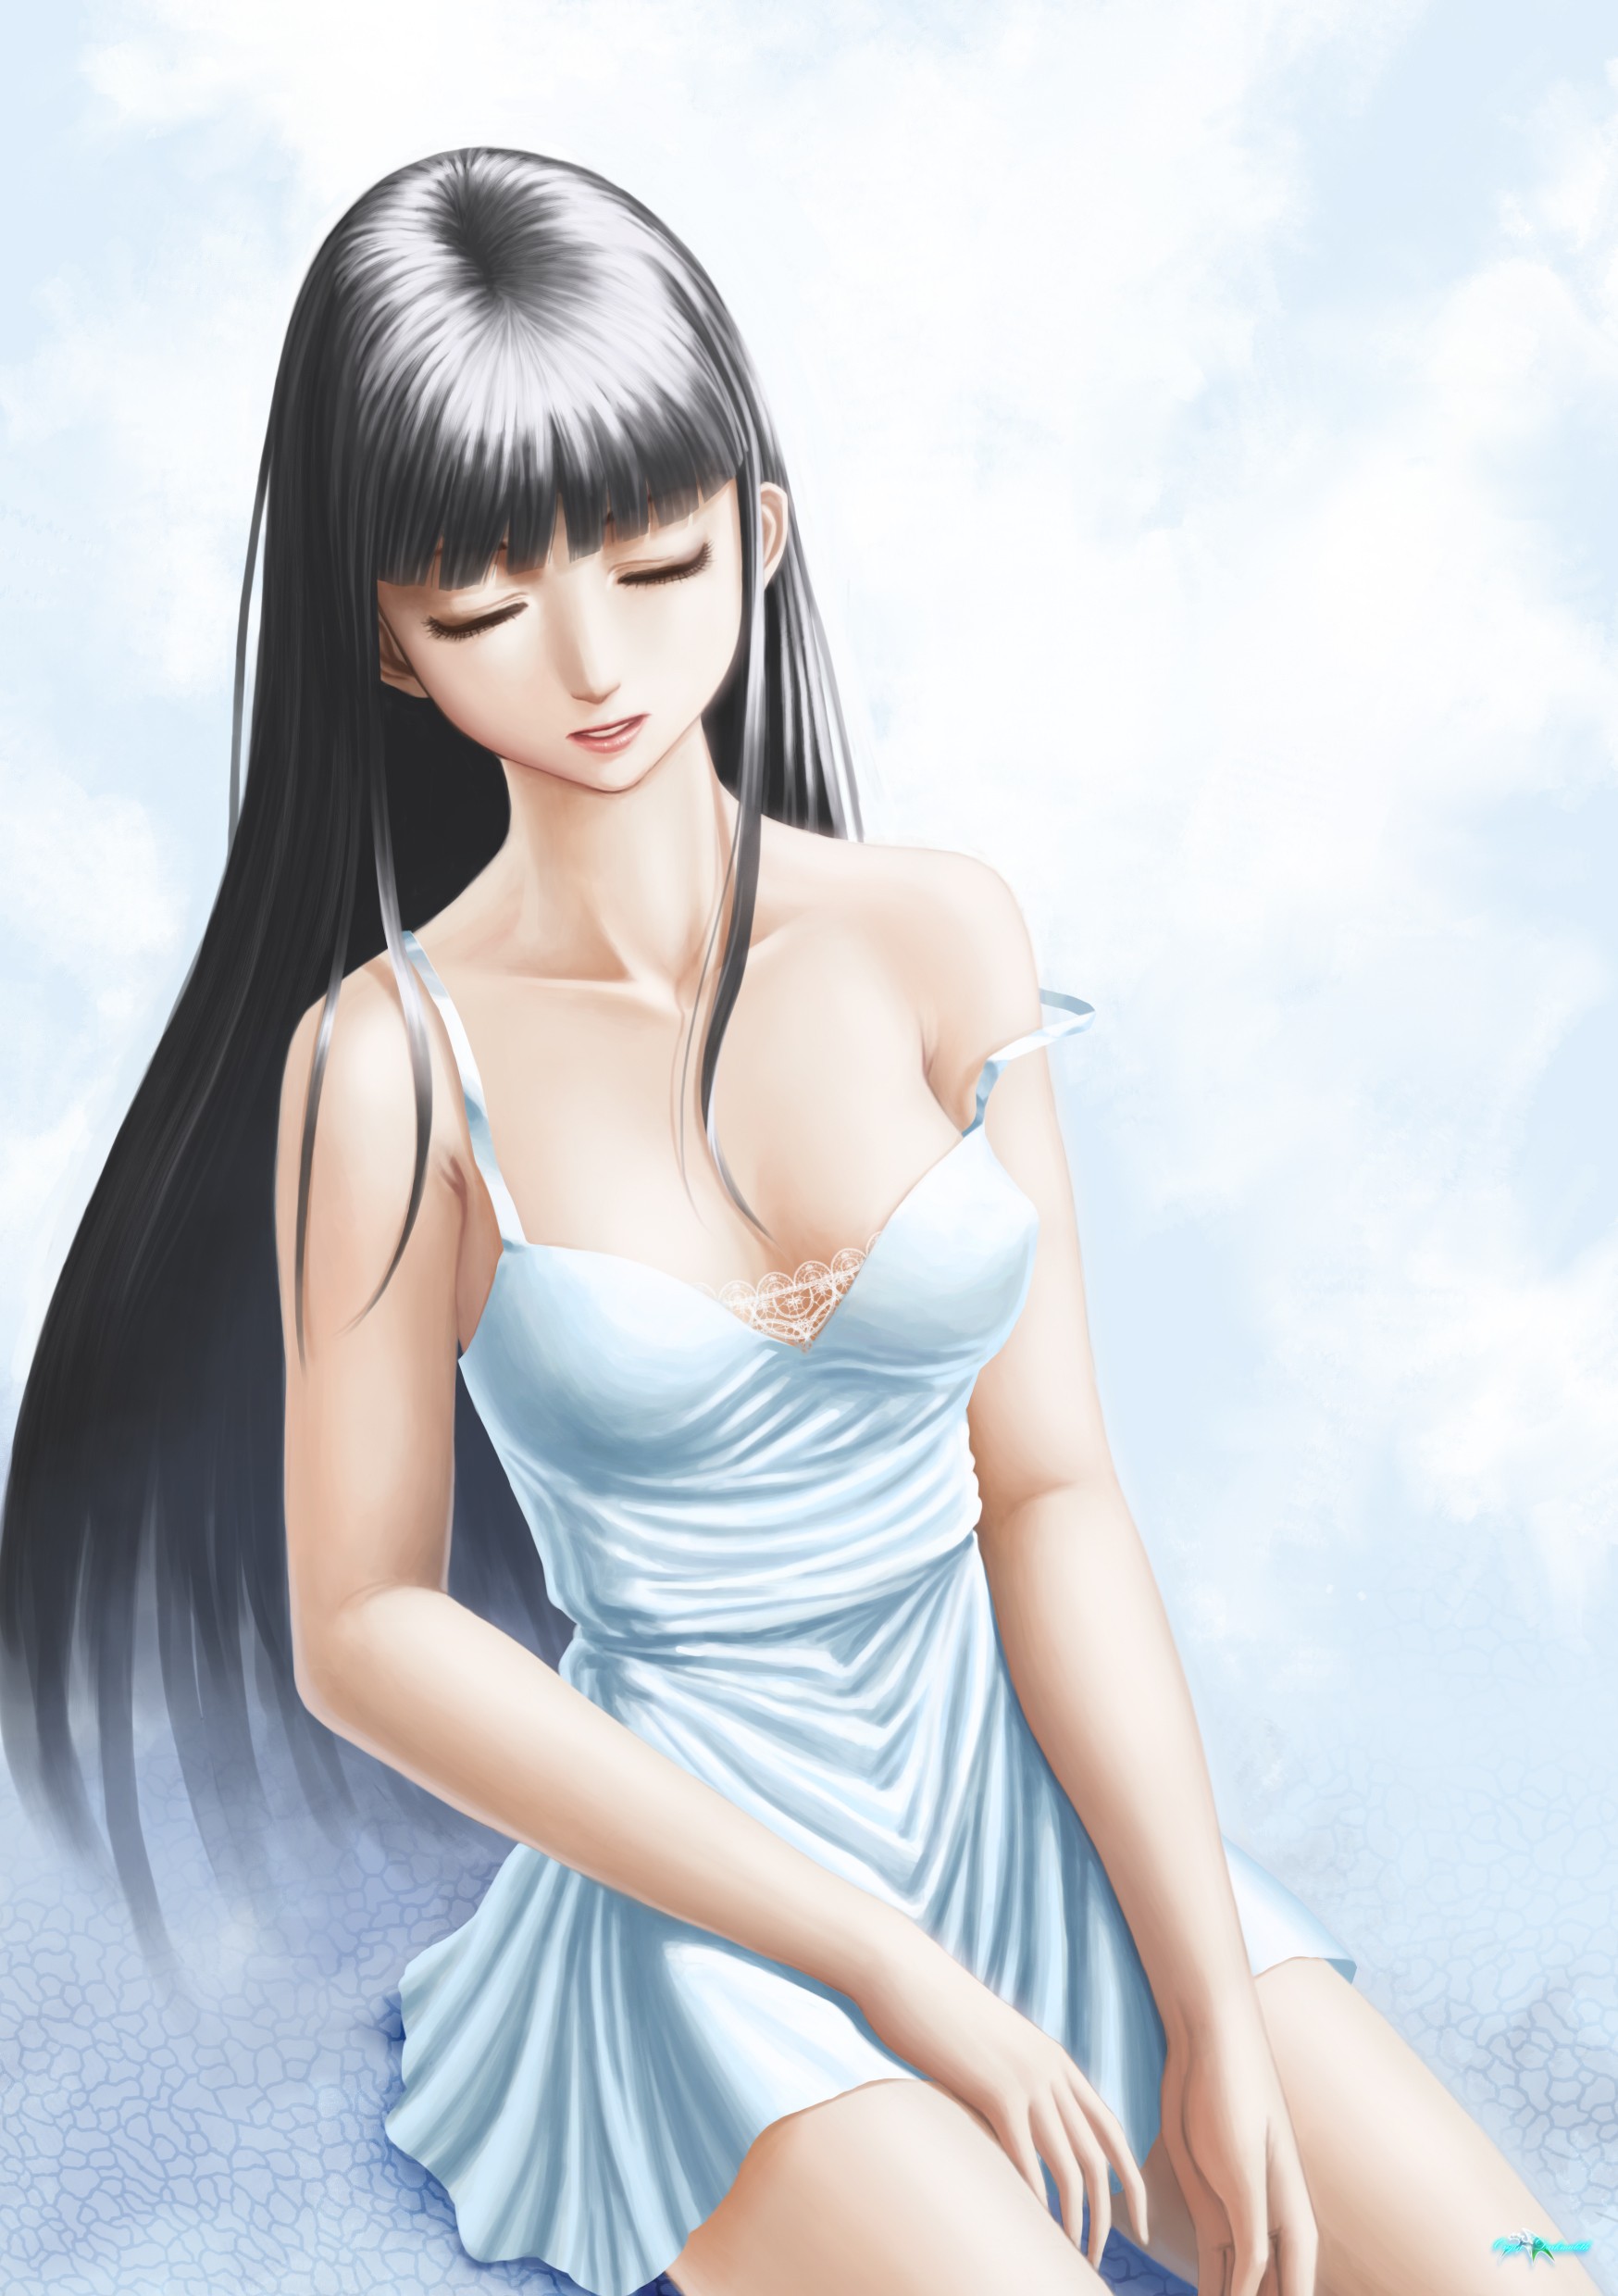 Anime 1748x2480 anime anime girls long hair dark hair dress no bra closed eyes simple background Pixiv women black hair